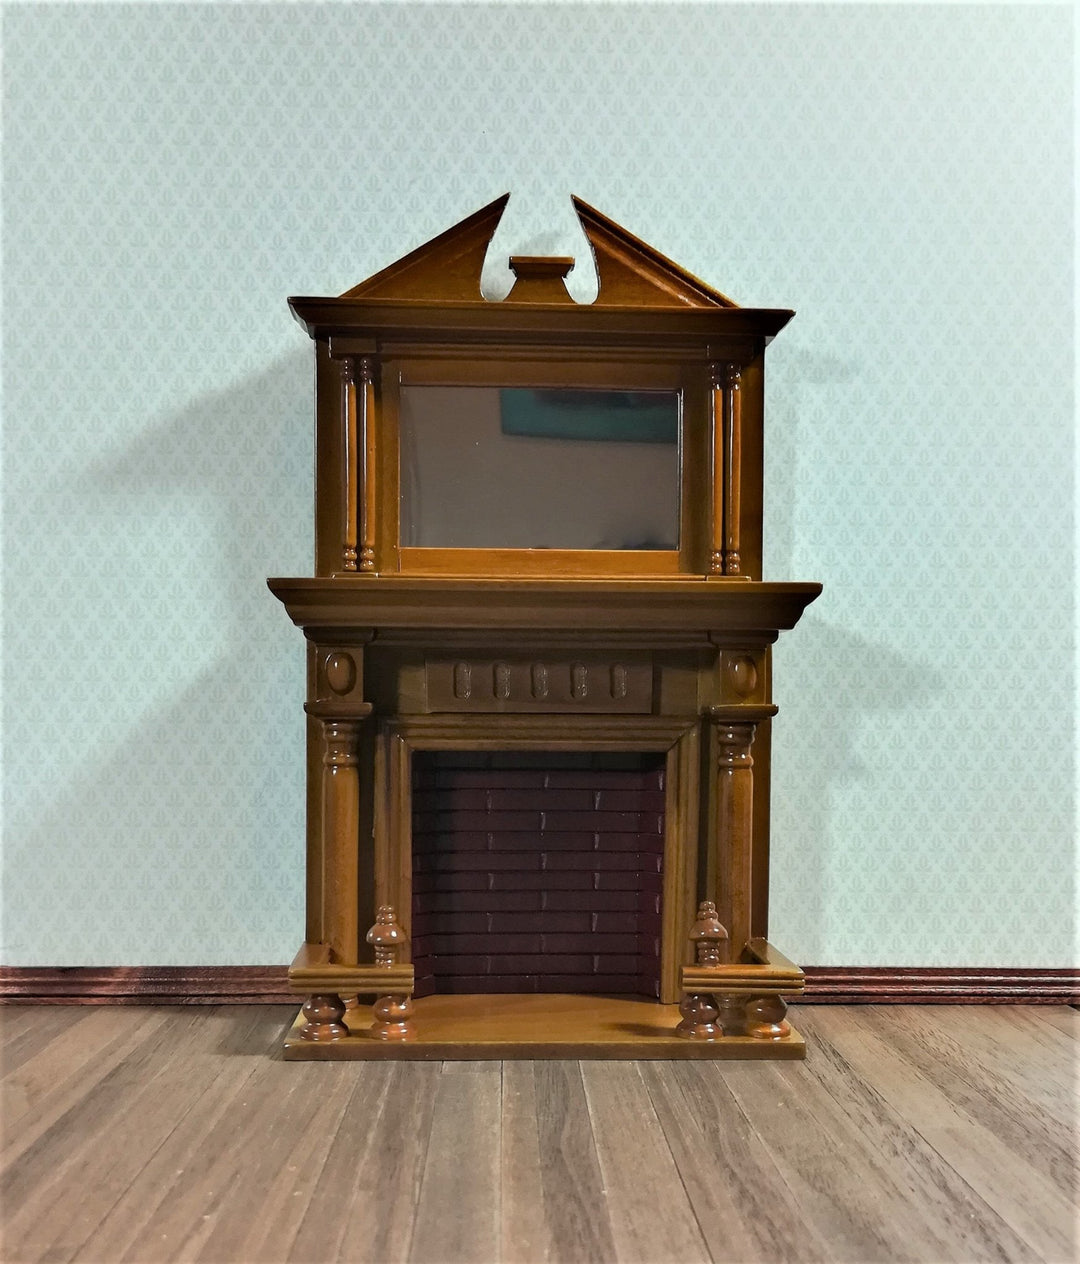 Dollhouse Fireplace Large with Square Mirror Walnut Finish 1:12 Scale Miniature Furniture - Miniature Crush